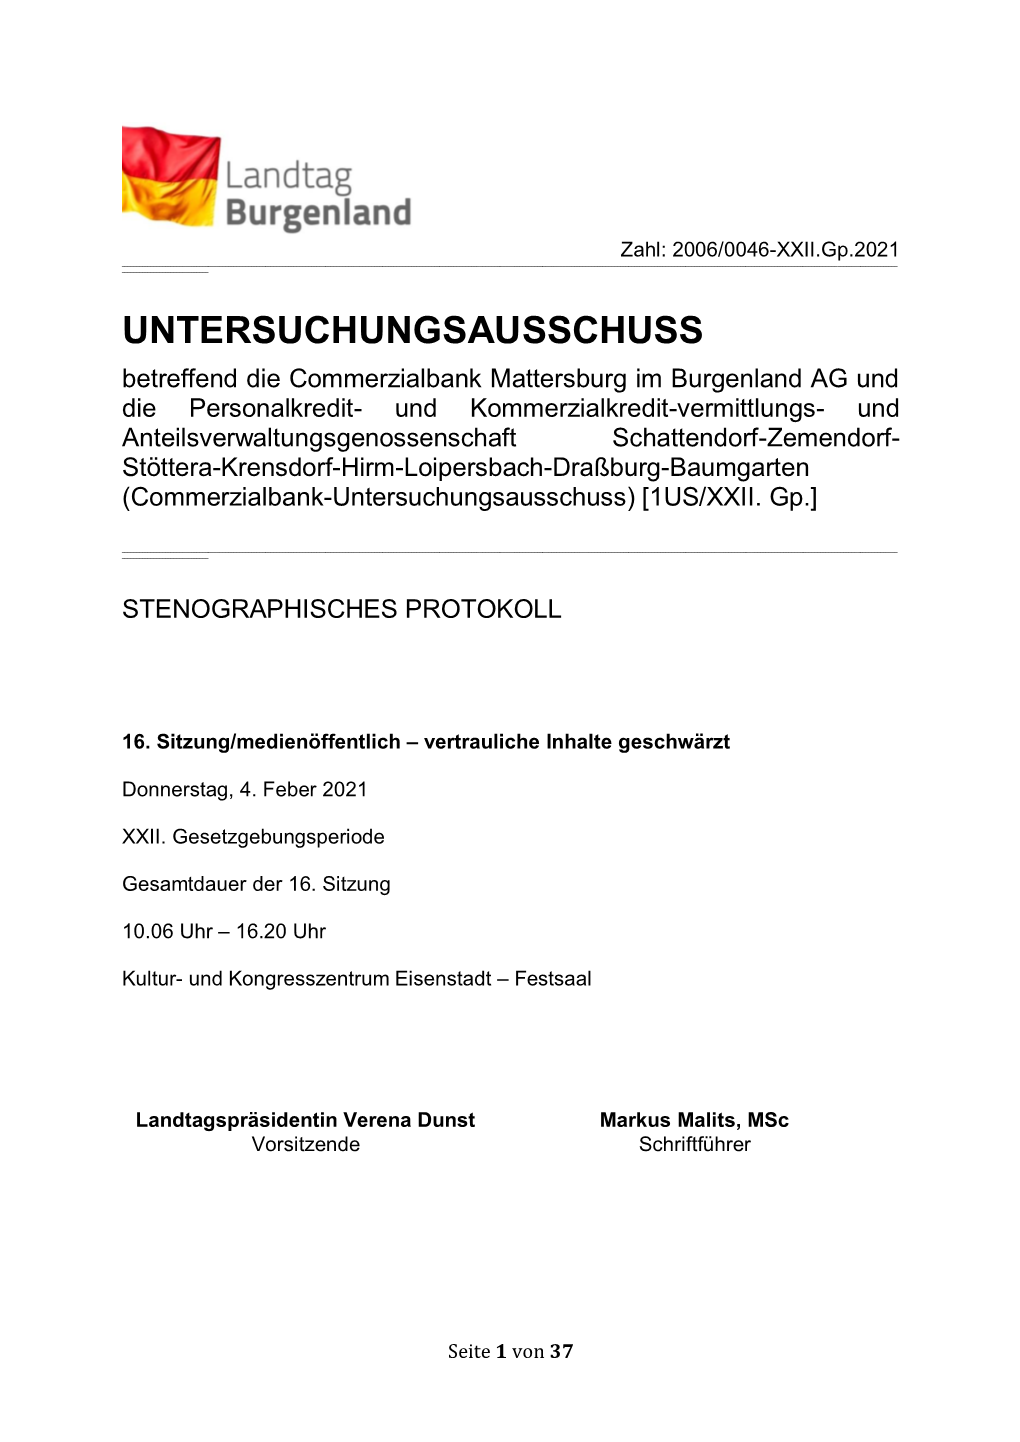 Stenografisches Protokoll Ludwig